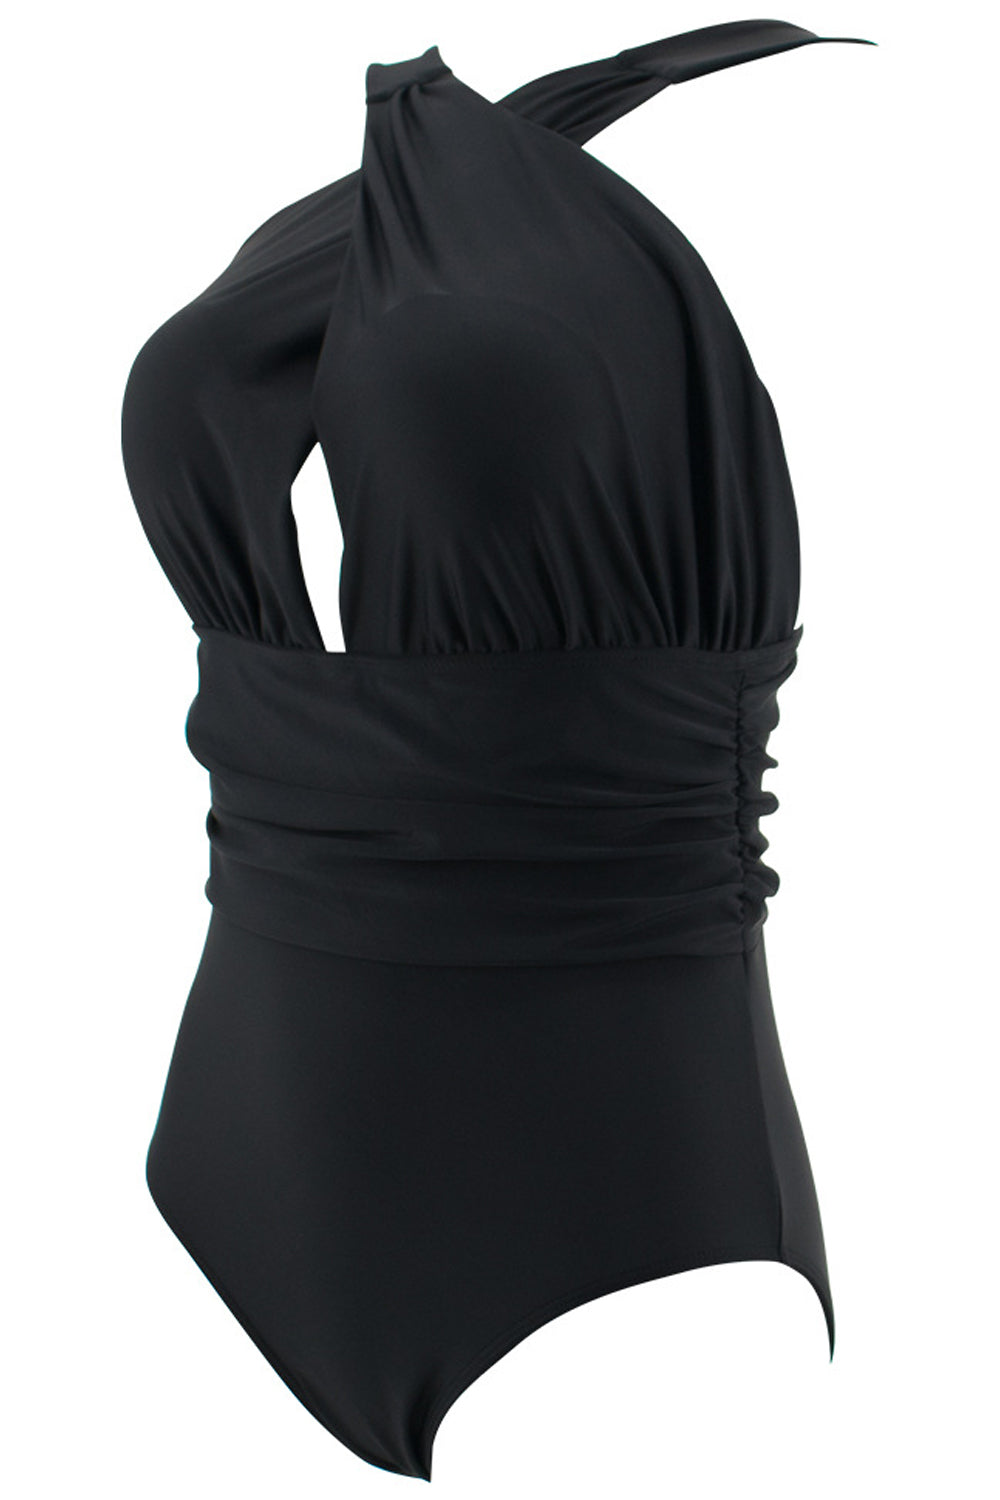 Iyasson Black Cross Design One-piece Swimsuit